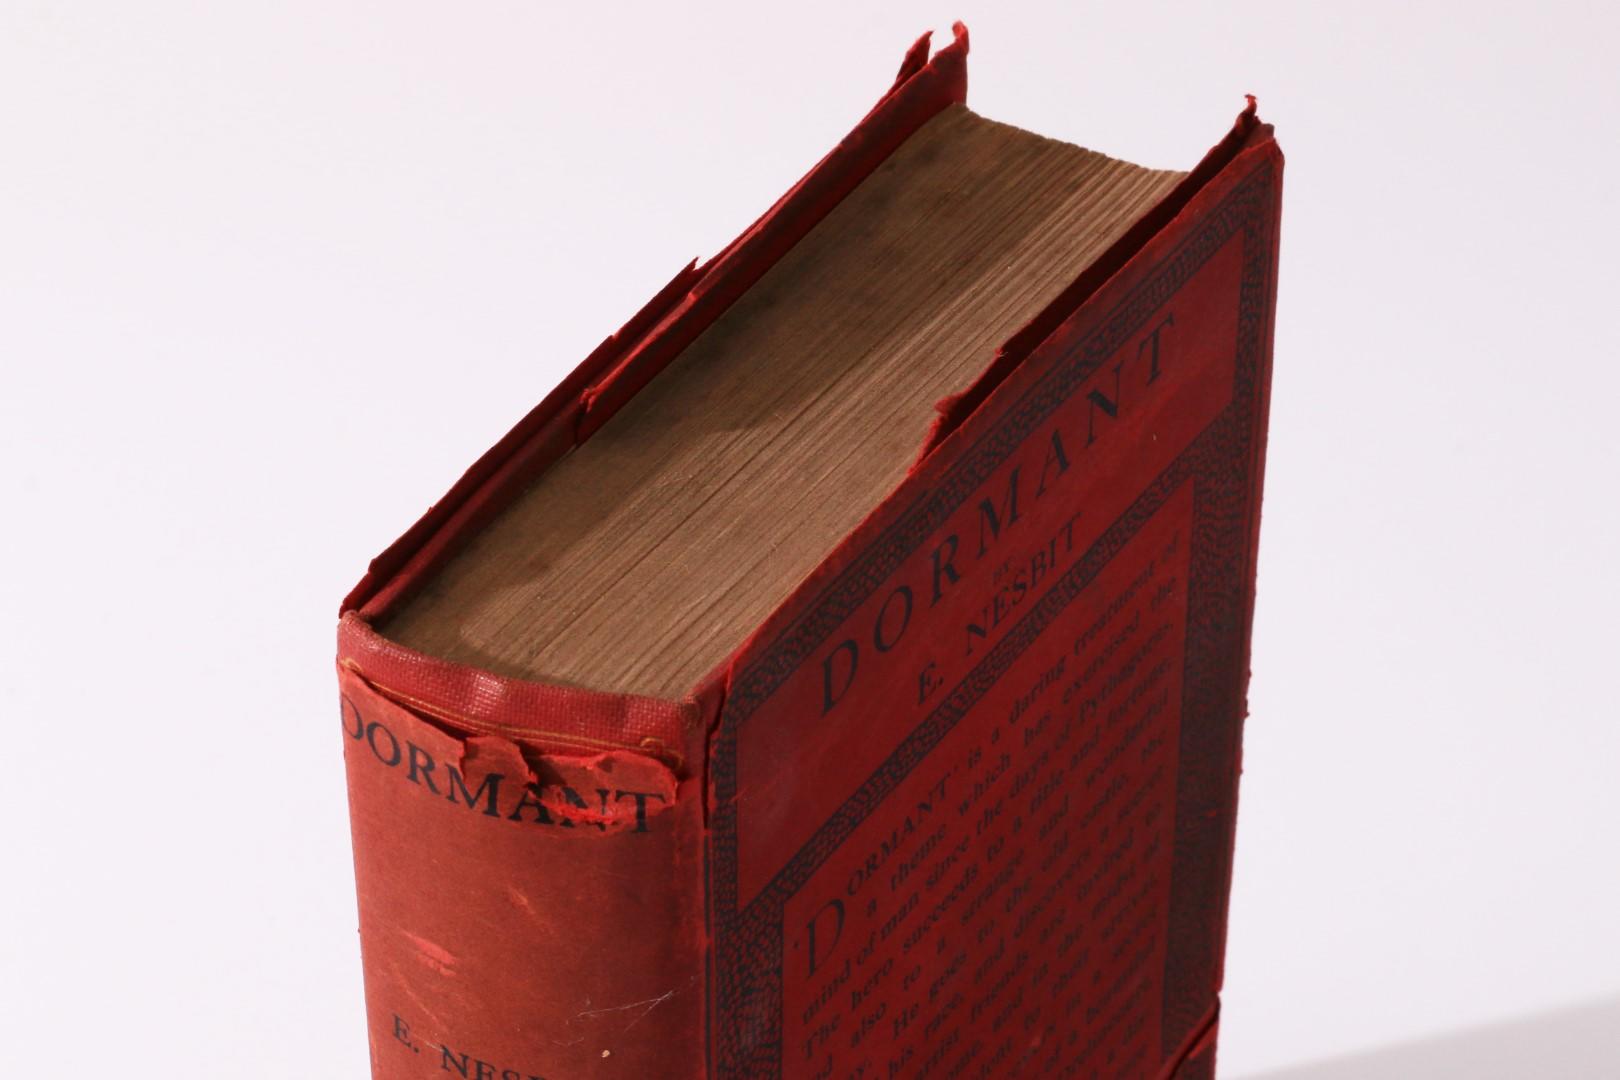 E. Nesbit - Dormant - Methuen, 1911, Second Edition. Signed